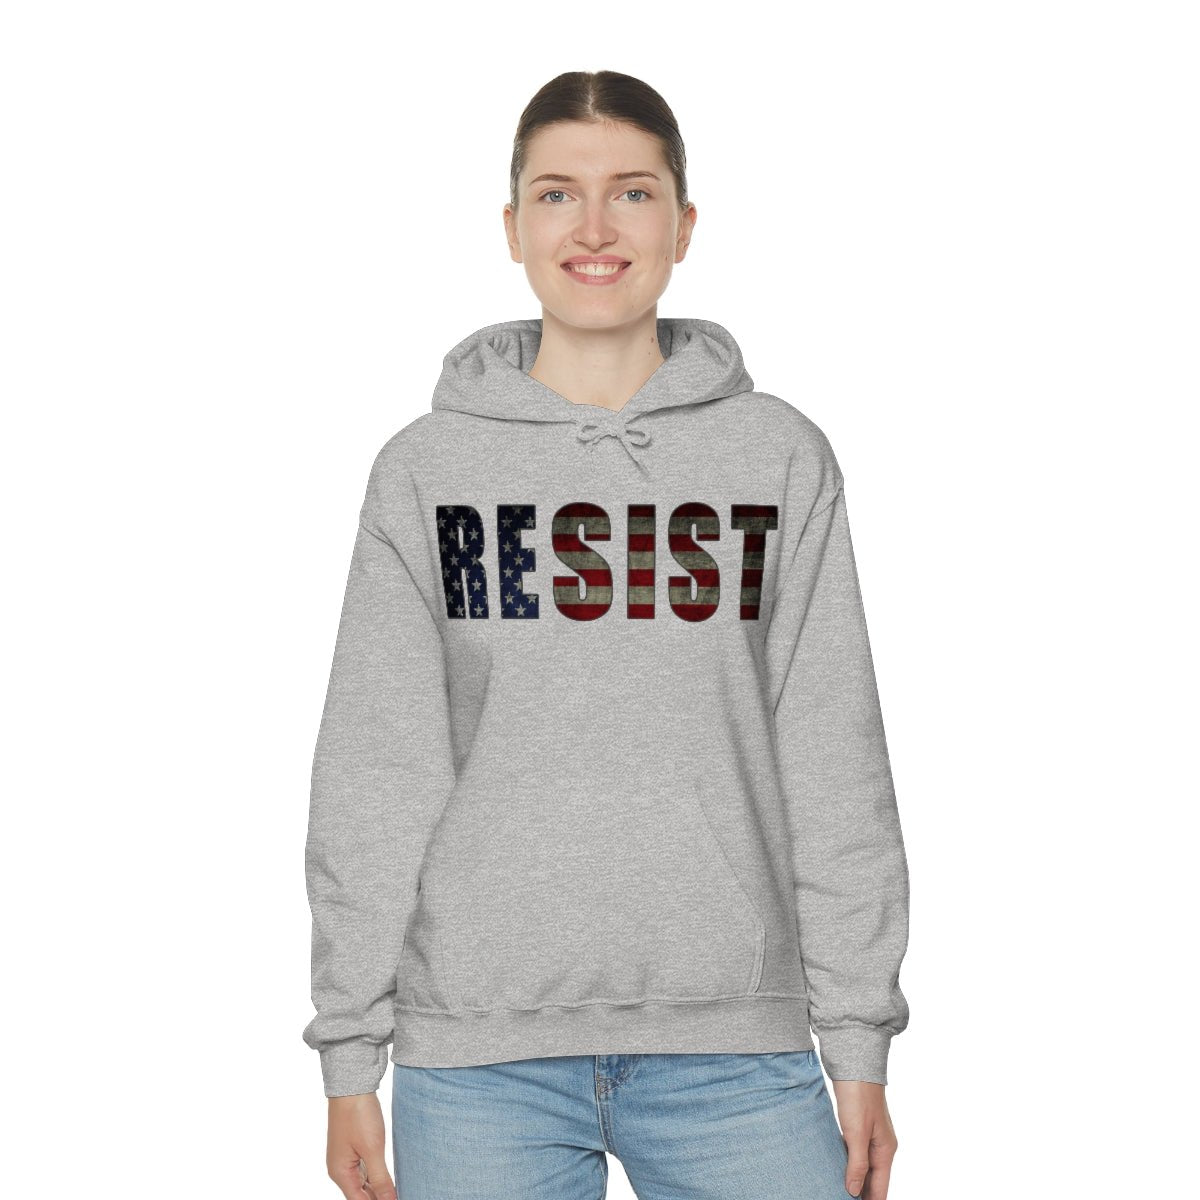 RESIST Hoody | Activist Radical Clothing